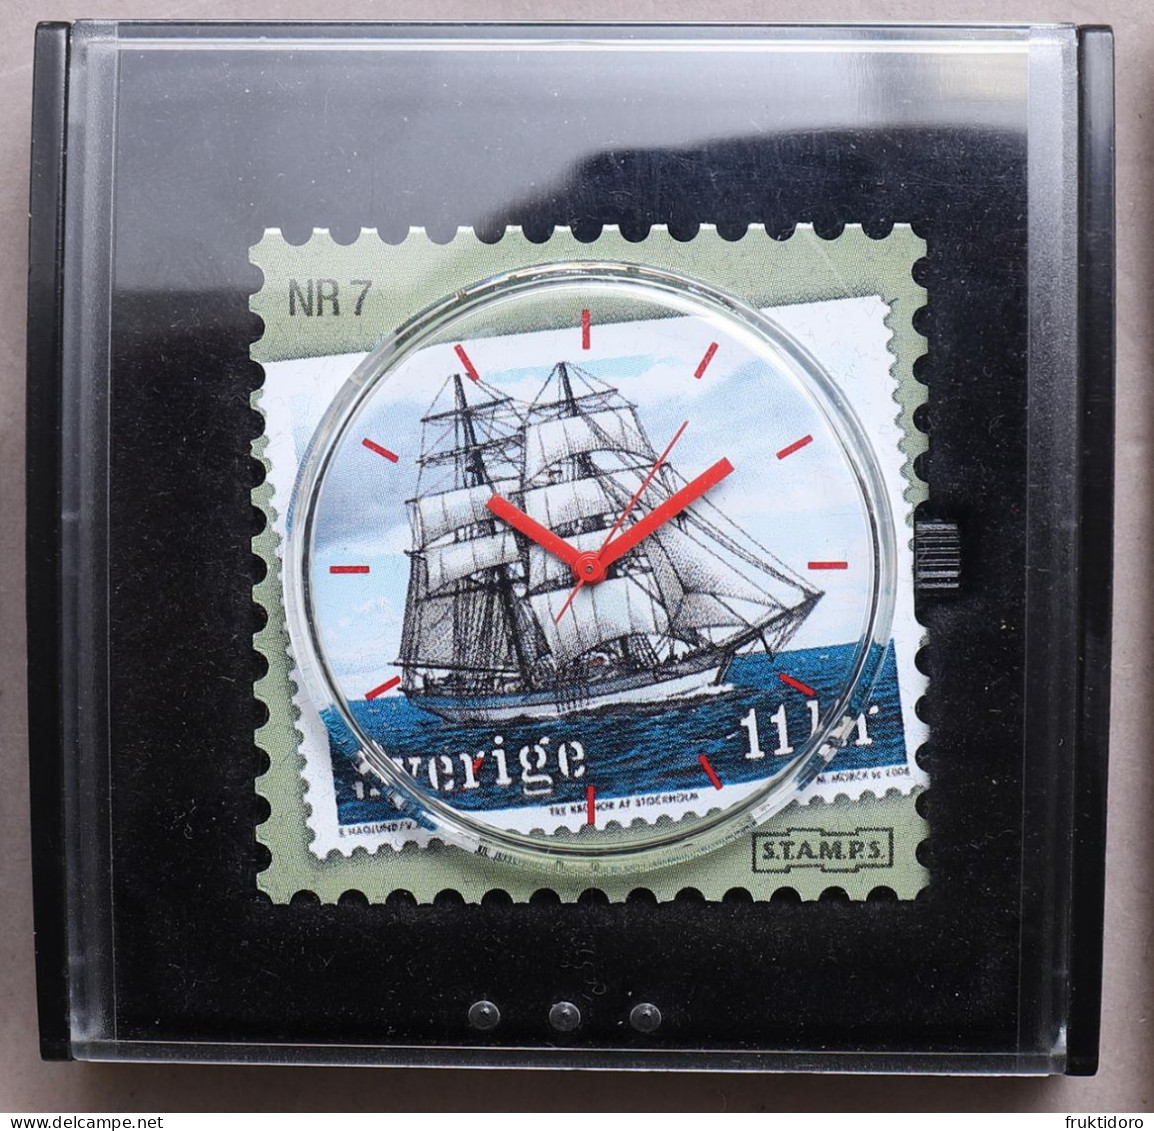 Sweden Stamp Clock Nr 7 - Sailboat T/S Gunilla - 2008 - Moderne Uhren